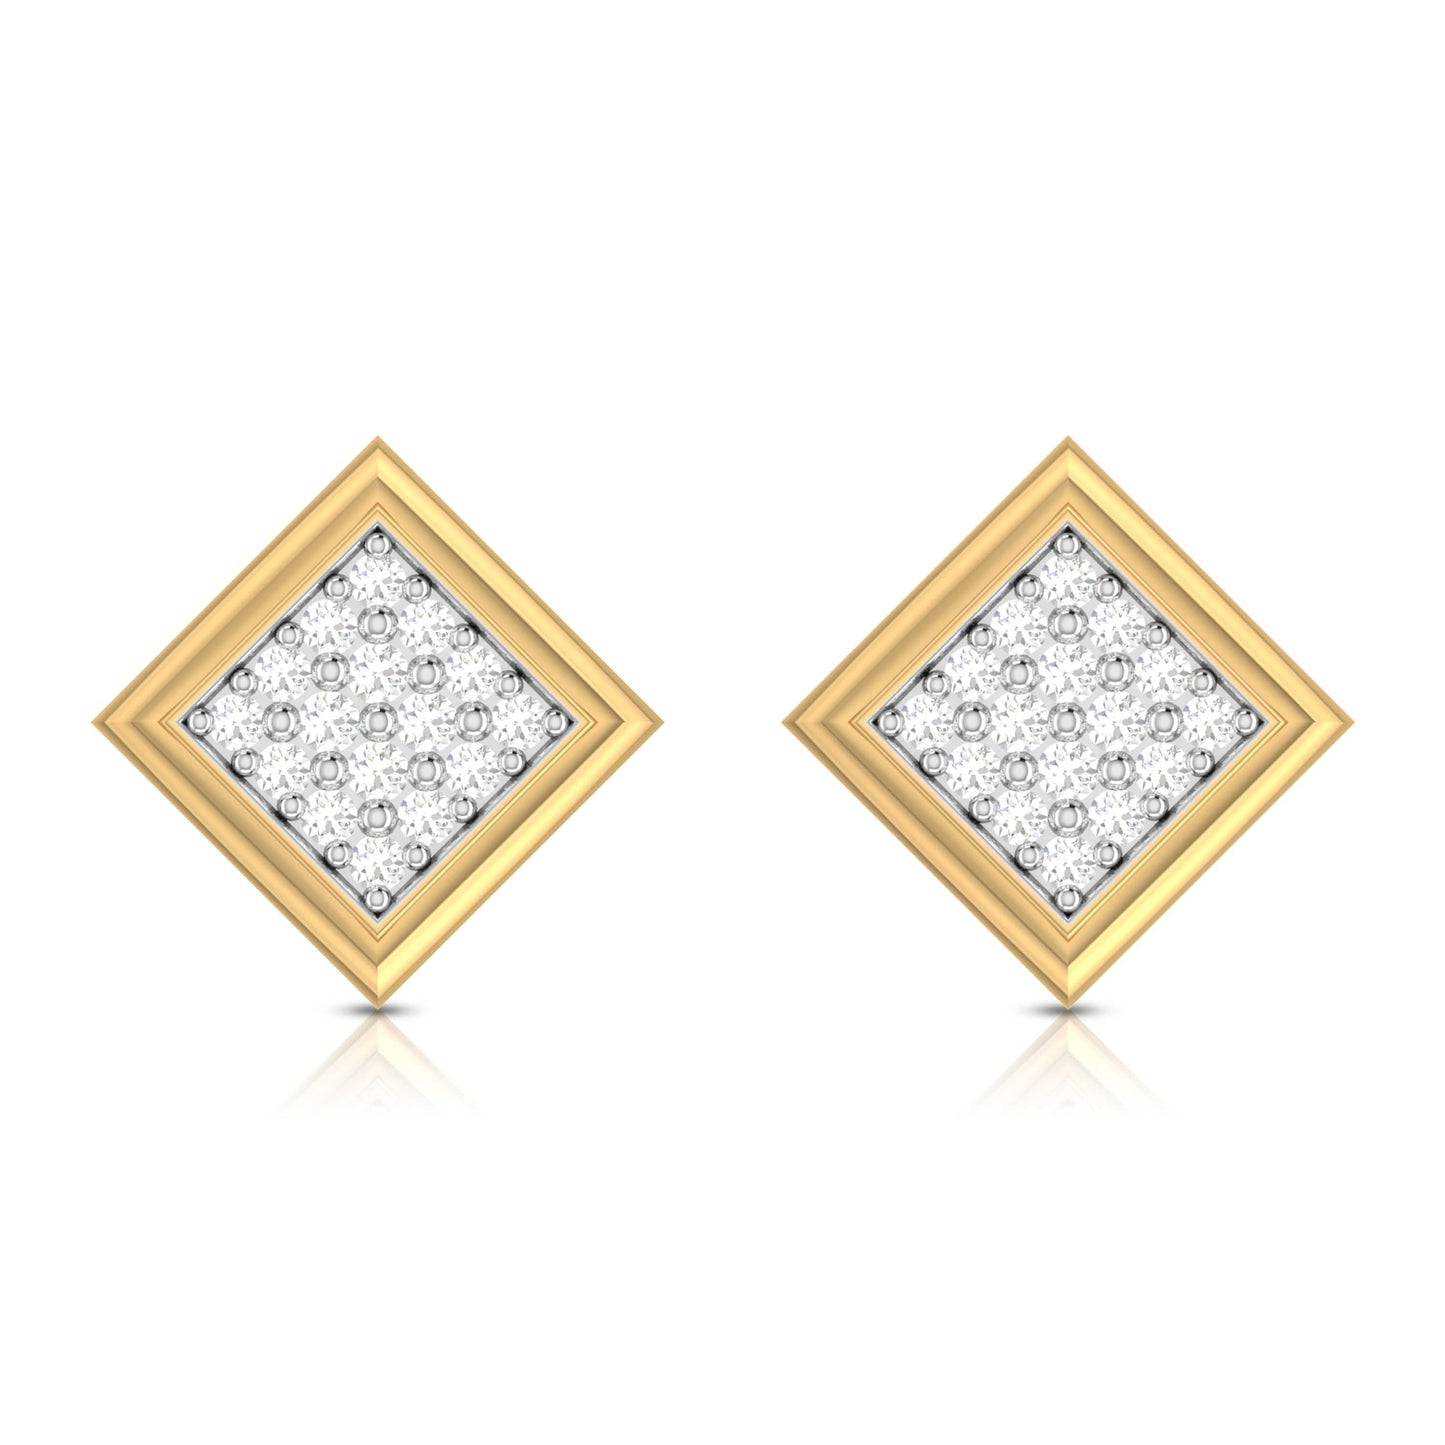 Gold Diamond Earrings for Women in 18 Karat Yellow Gold by Fiona Diamonds